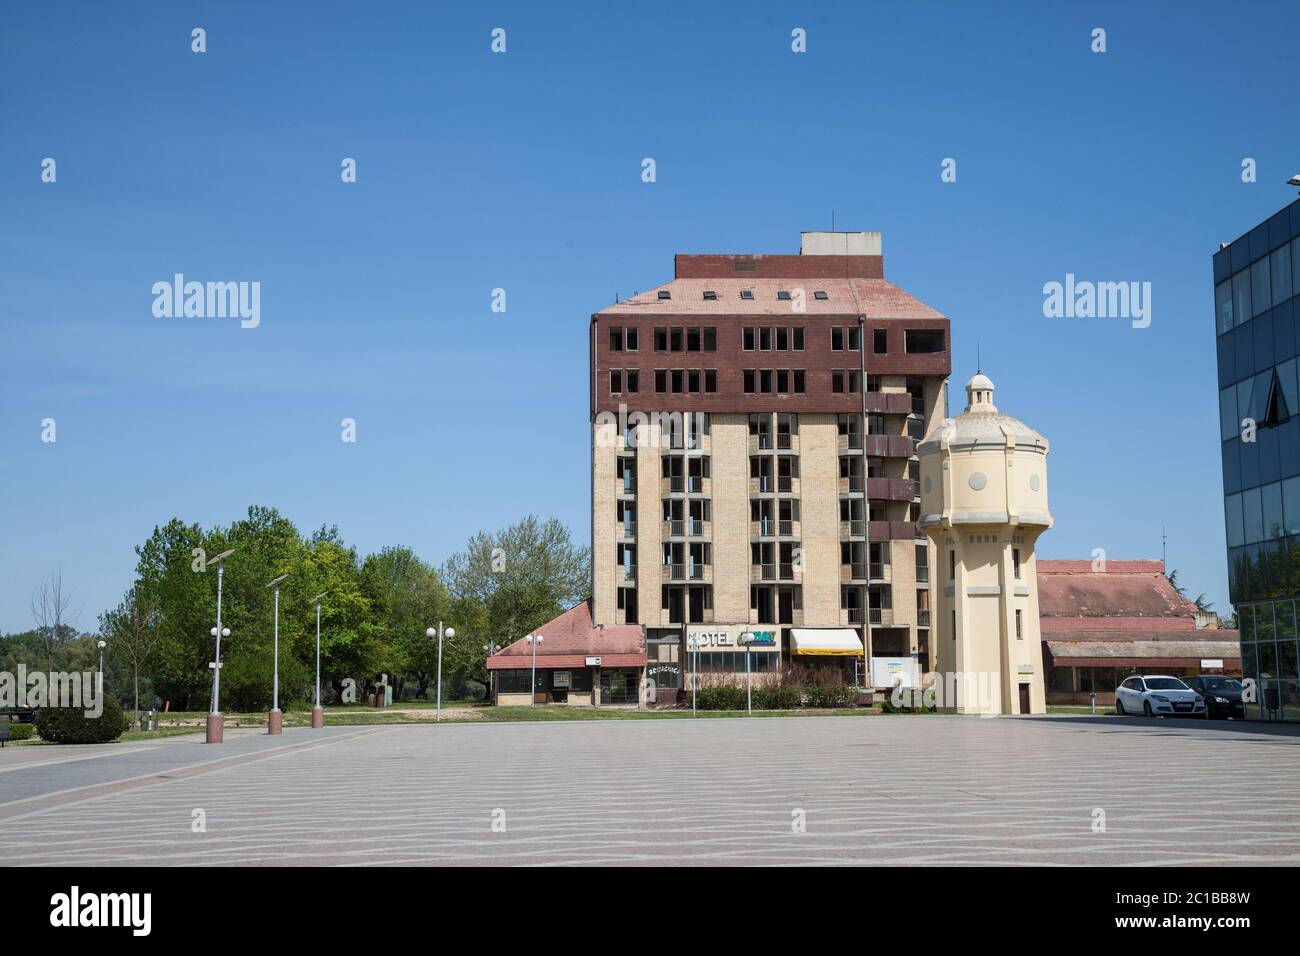 VUKOVAR, CROATIA - APRIL 20, 2018: Hotel Dunav, an abandoned hotel and a major landmark of Vukovar, Croatia, in front of the main square of the city i Stock Photo